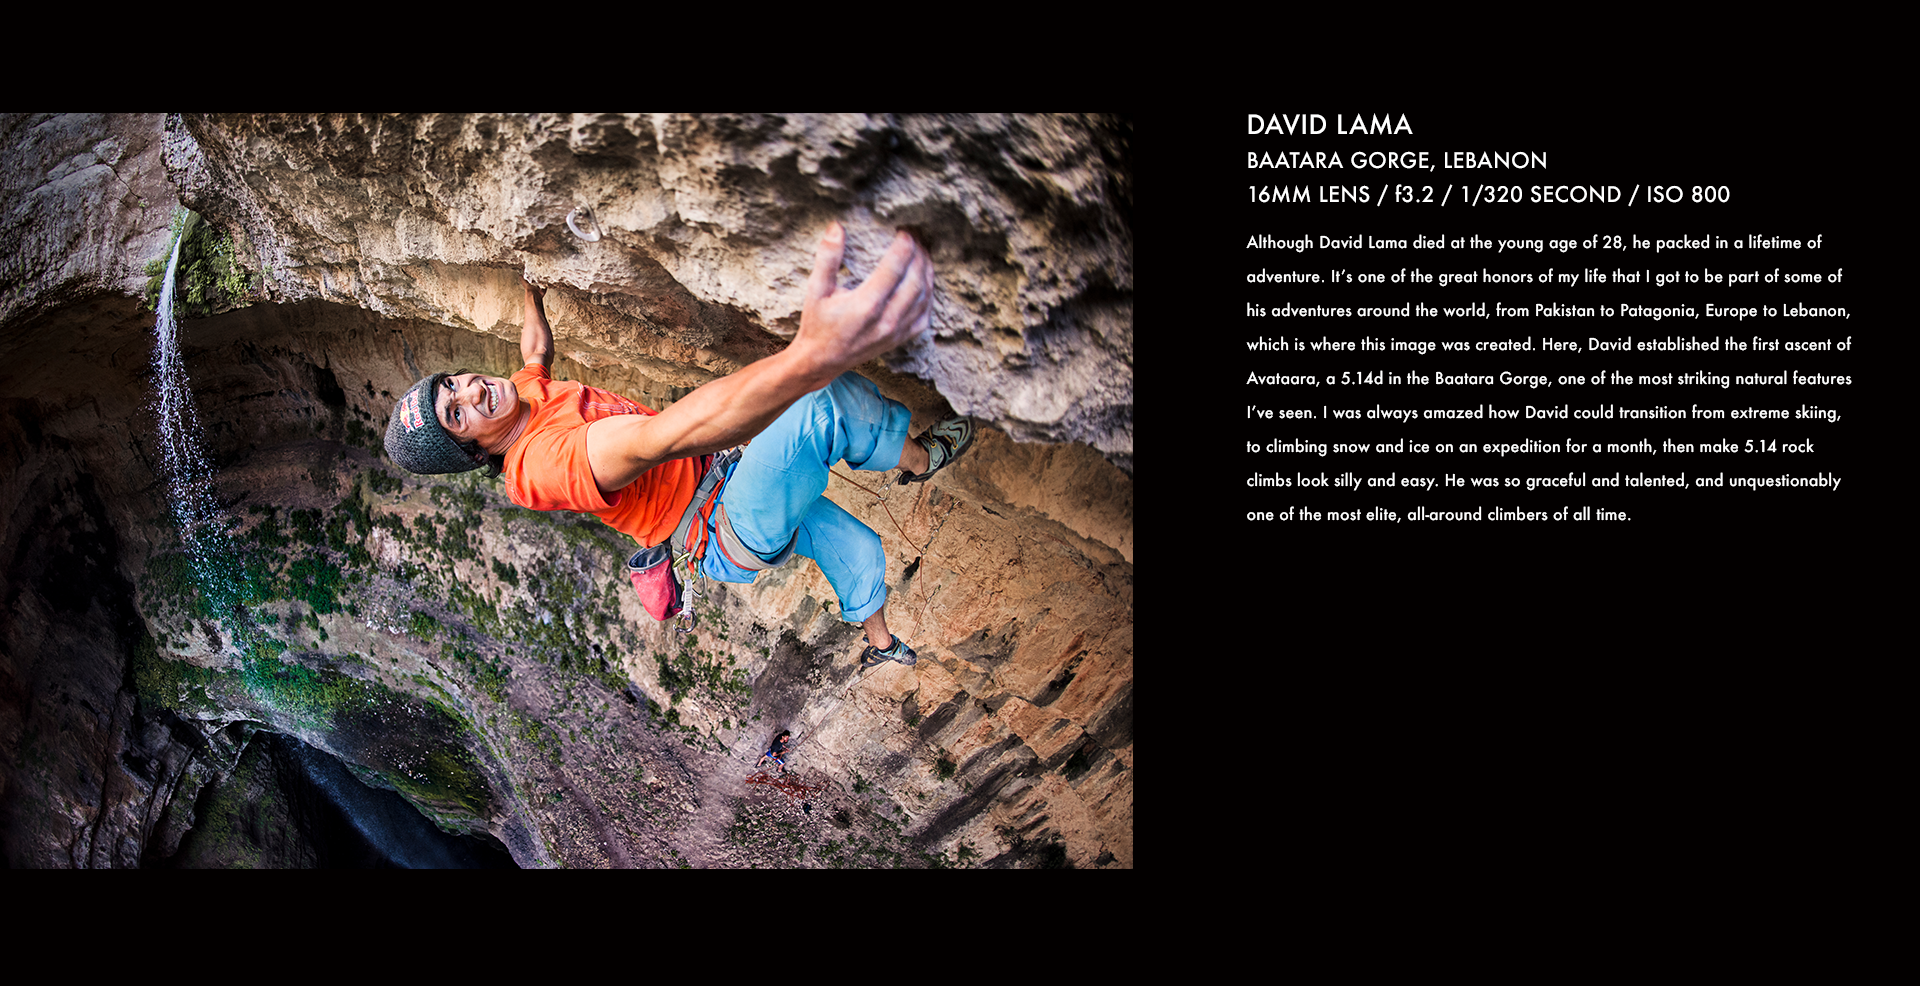  David Lama, Lebanon, climbing, Red Bull, mountain climbing, action sports, stories behind the images, corey rich 